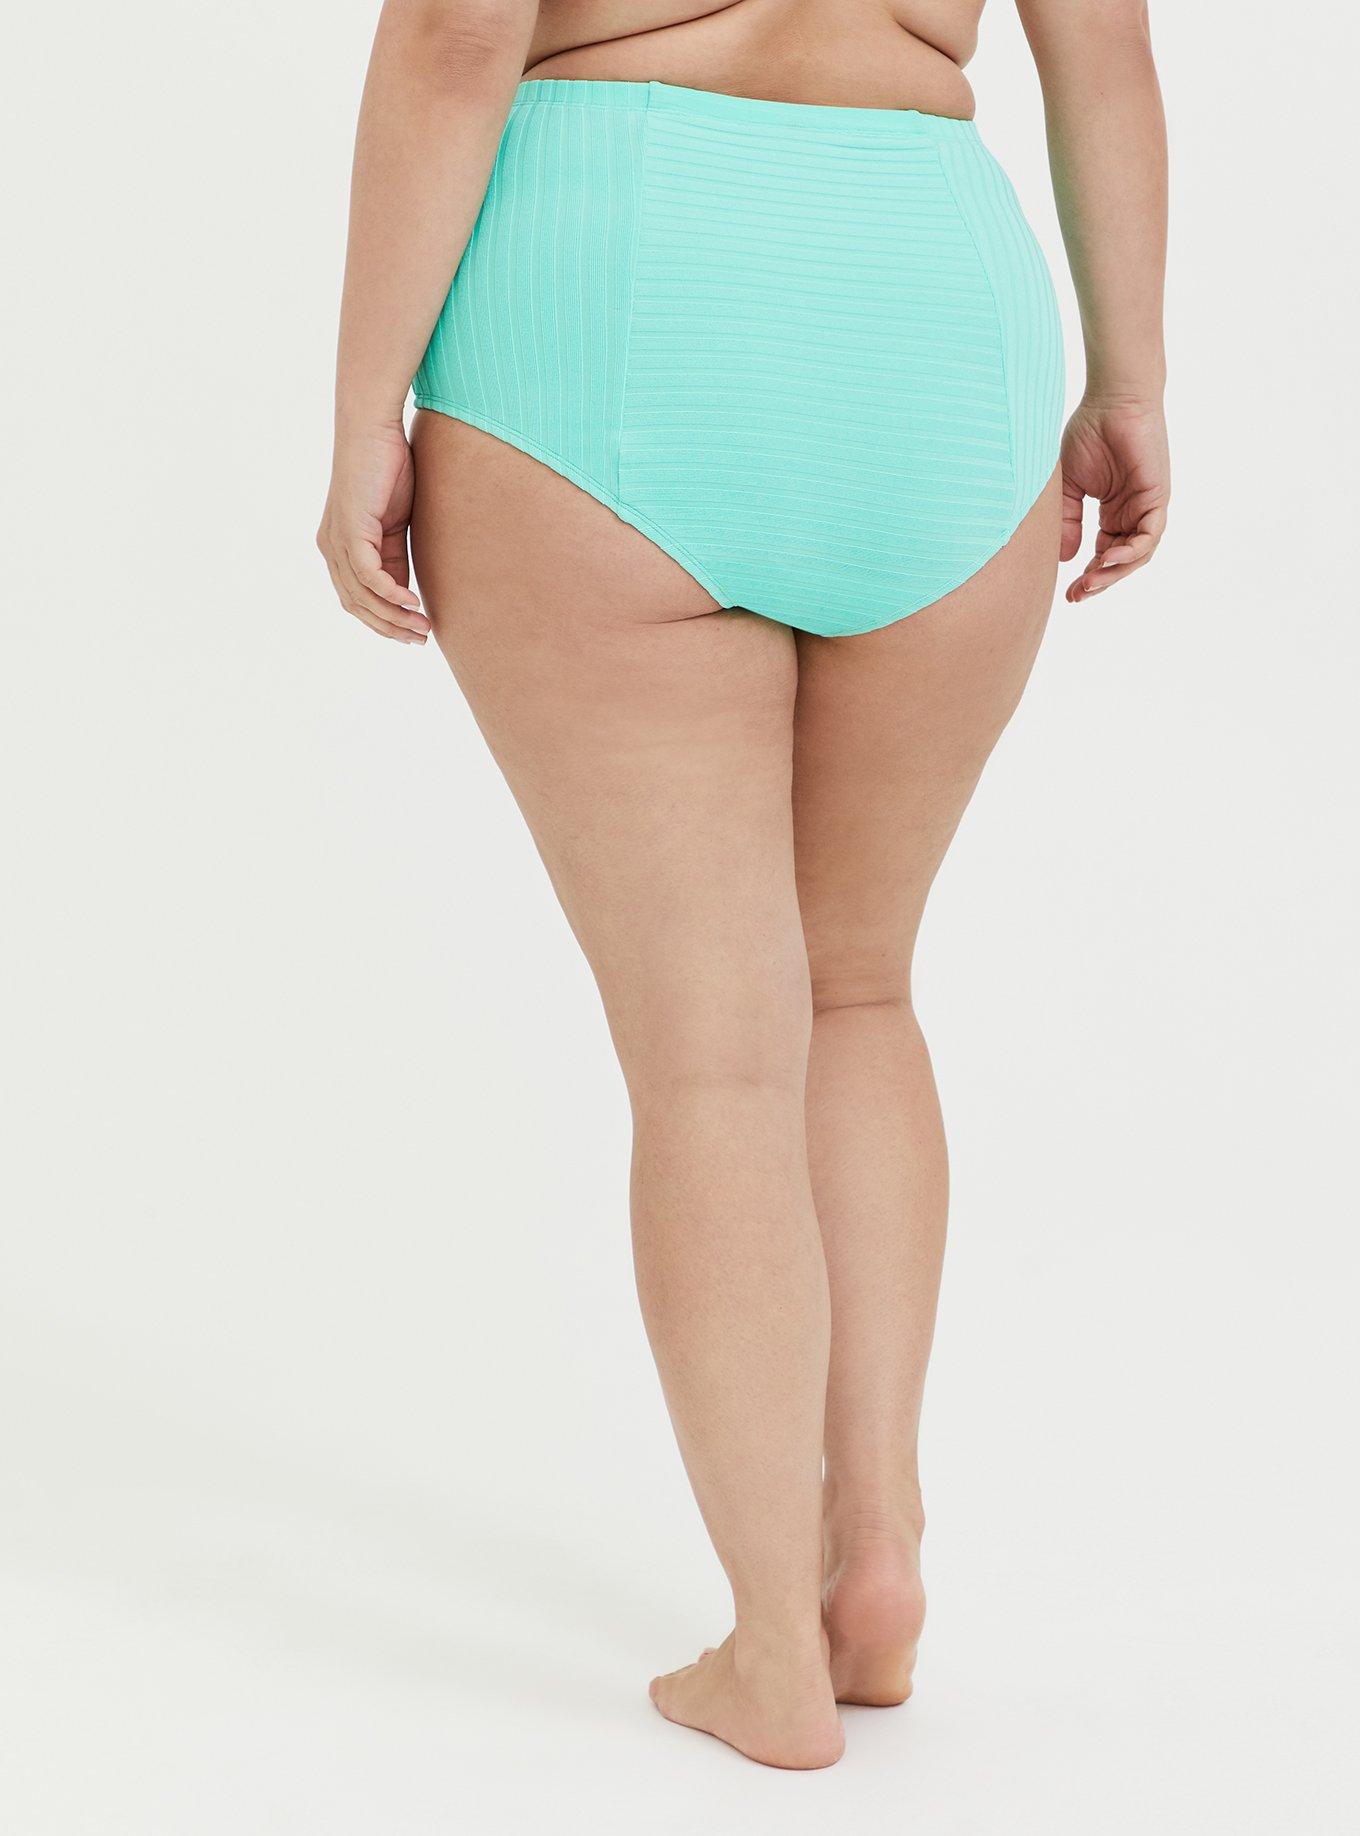 Jewel Cheeky Bikini Bottom in Pacific turquoise -  Canada